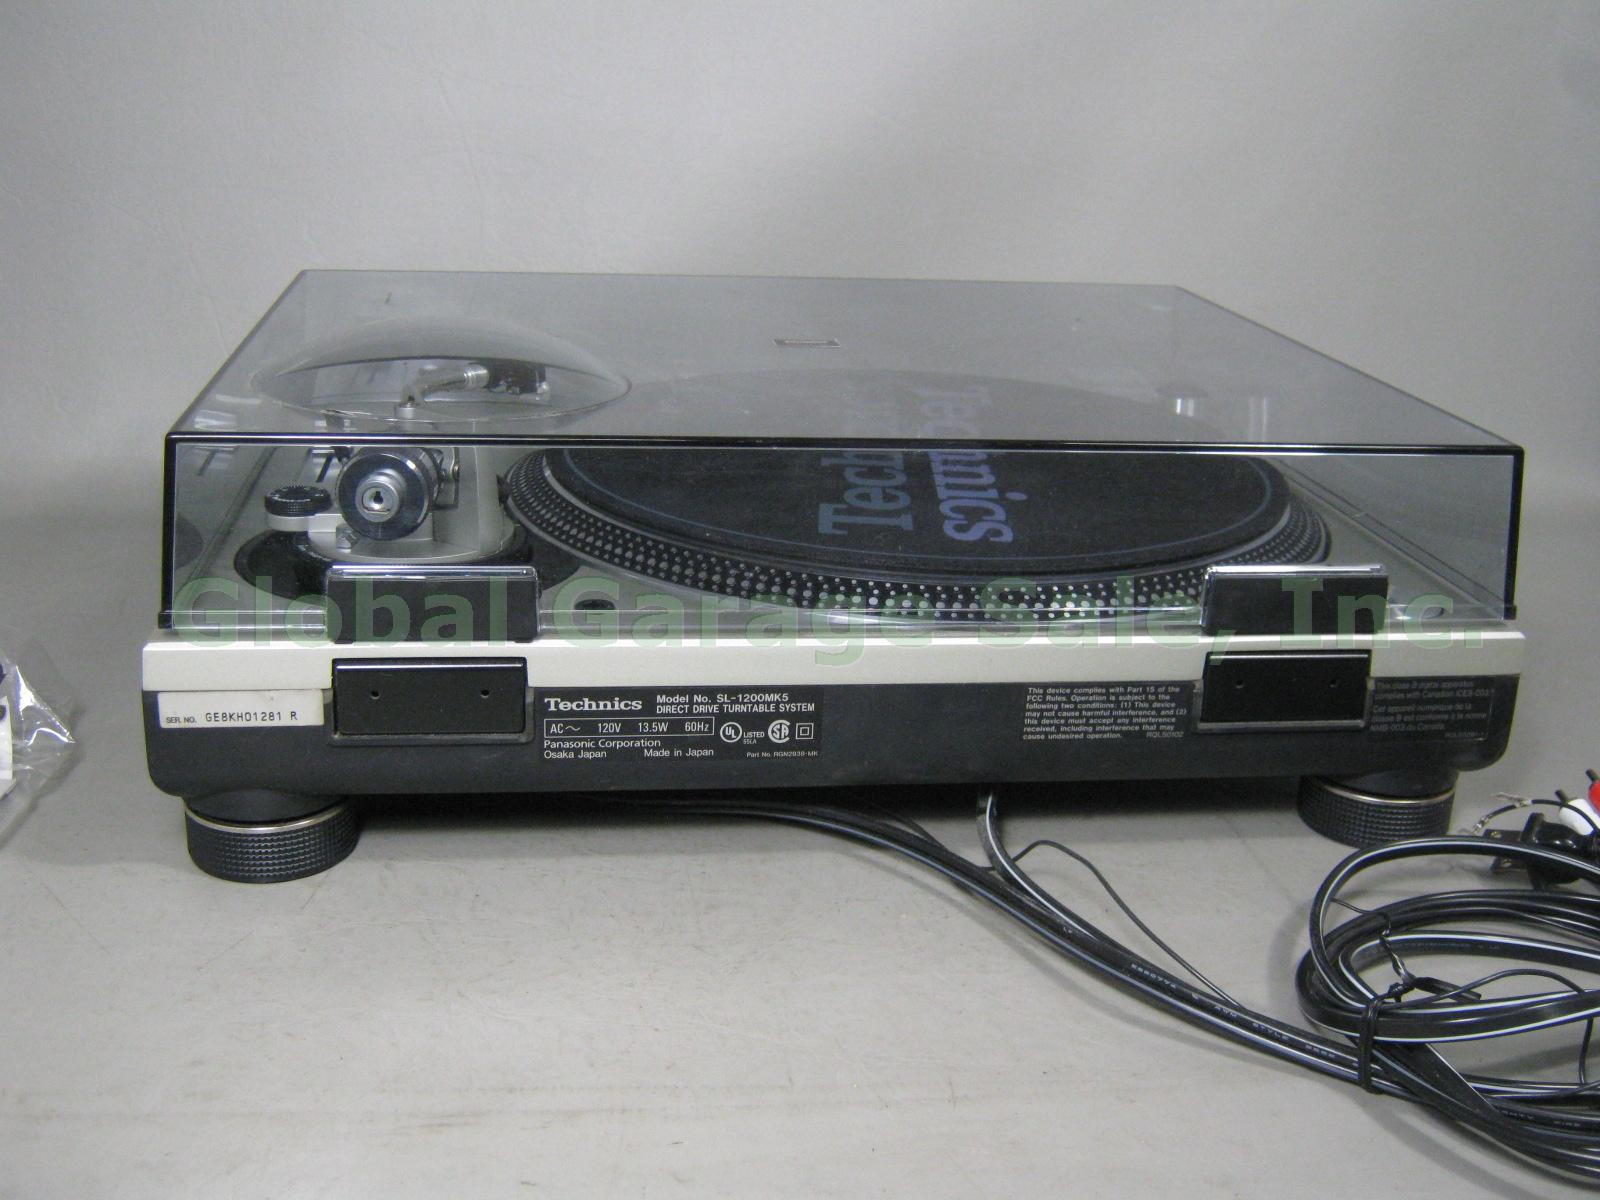 Technics SL-1200MK5 Quartz Direct Drive Pro DJ Turntable 1 Owner Original Box NR 4